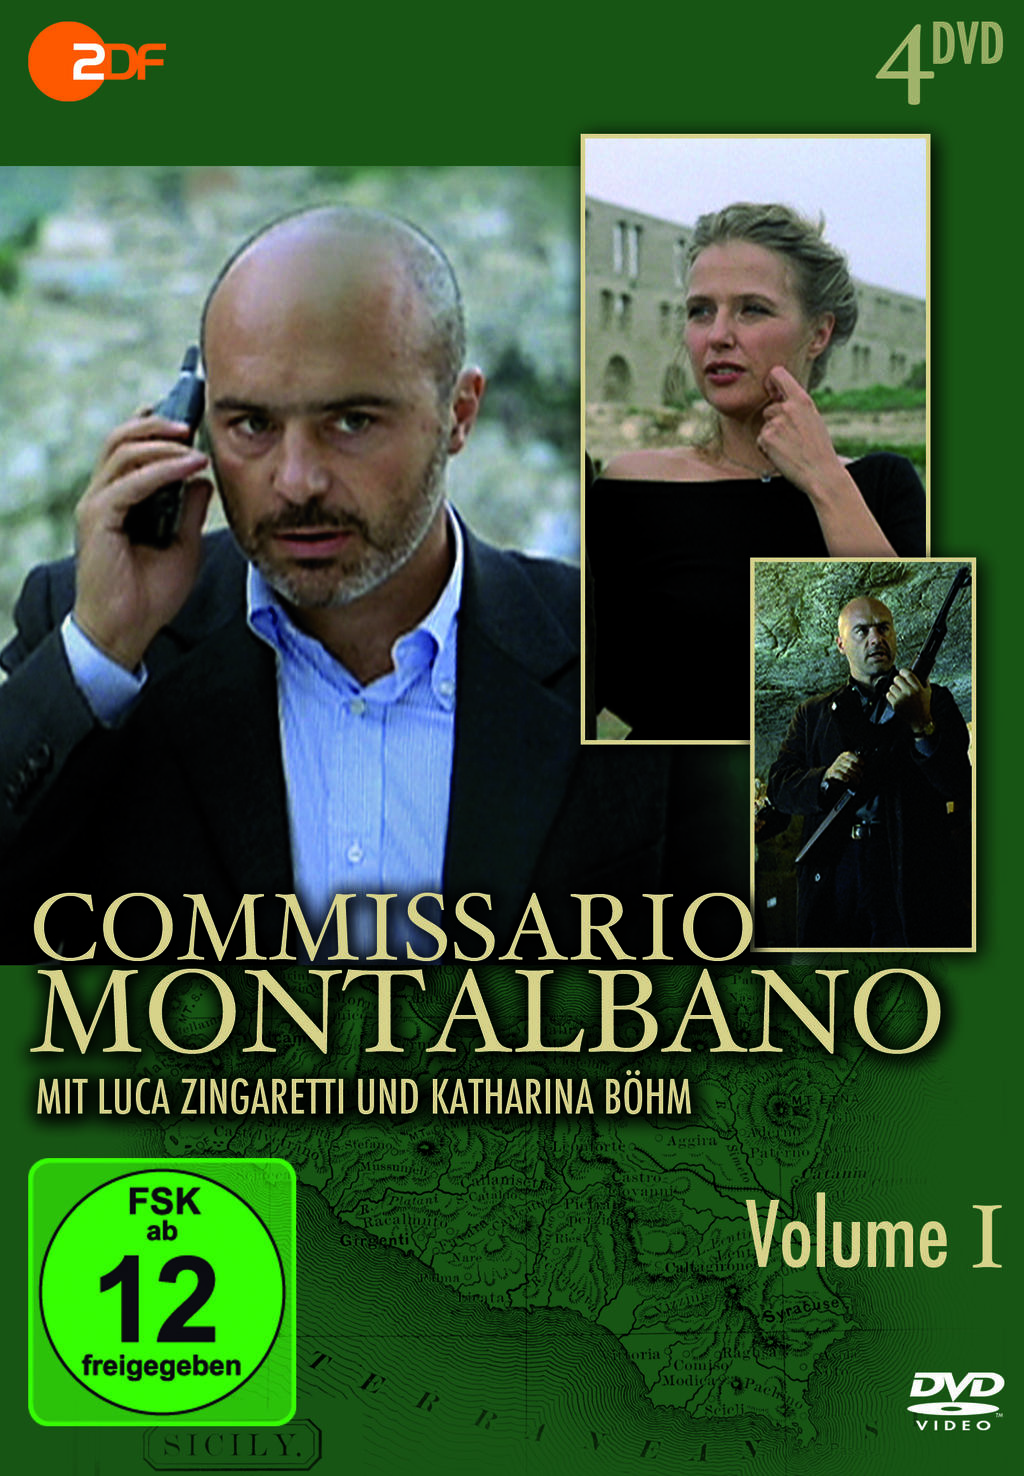 Commissario Montalbano: Par condicio | Season 5 | Episode 2